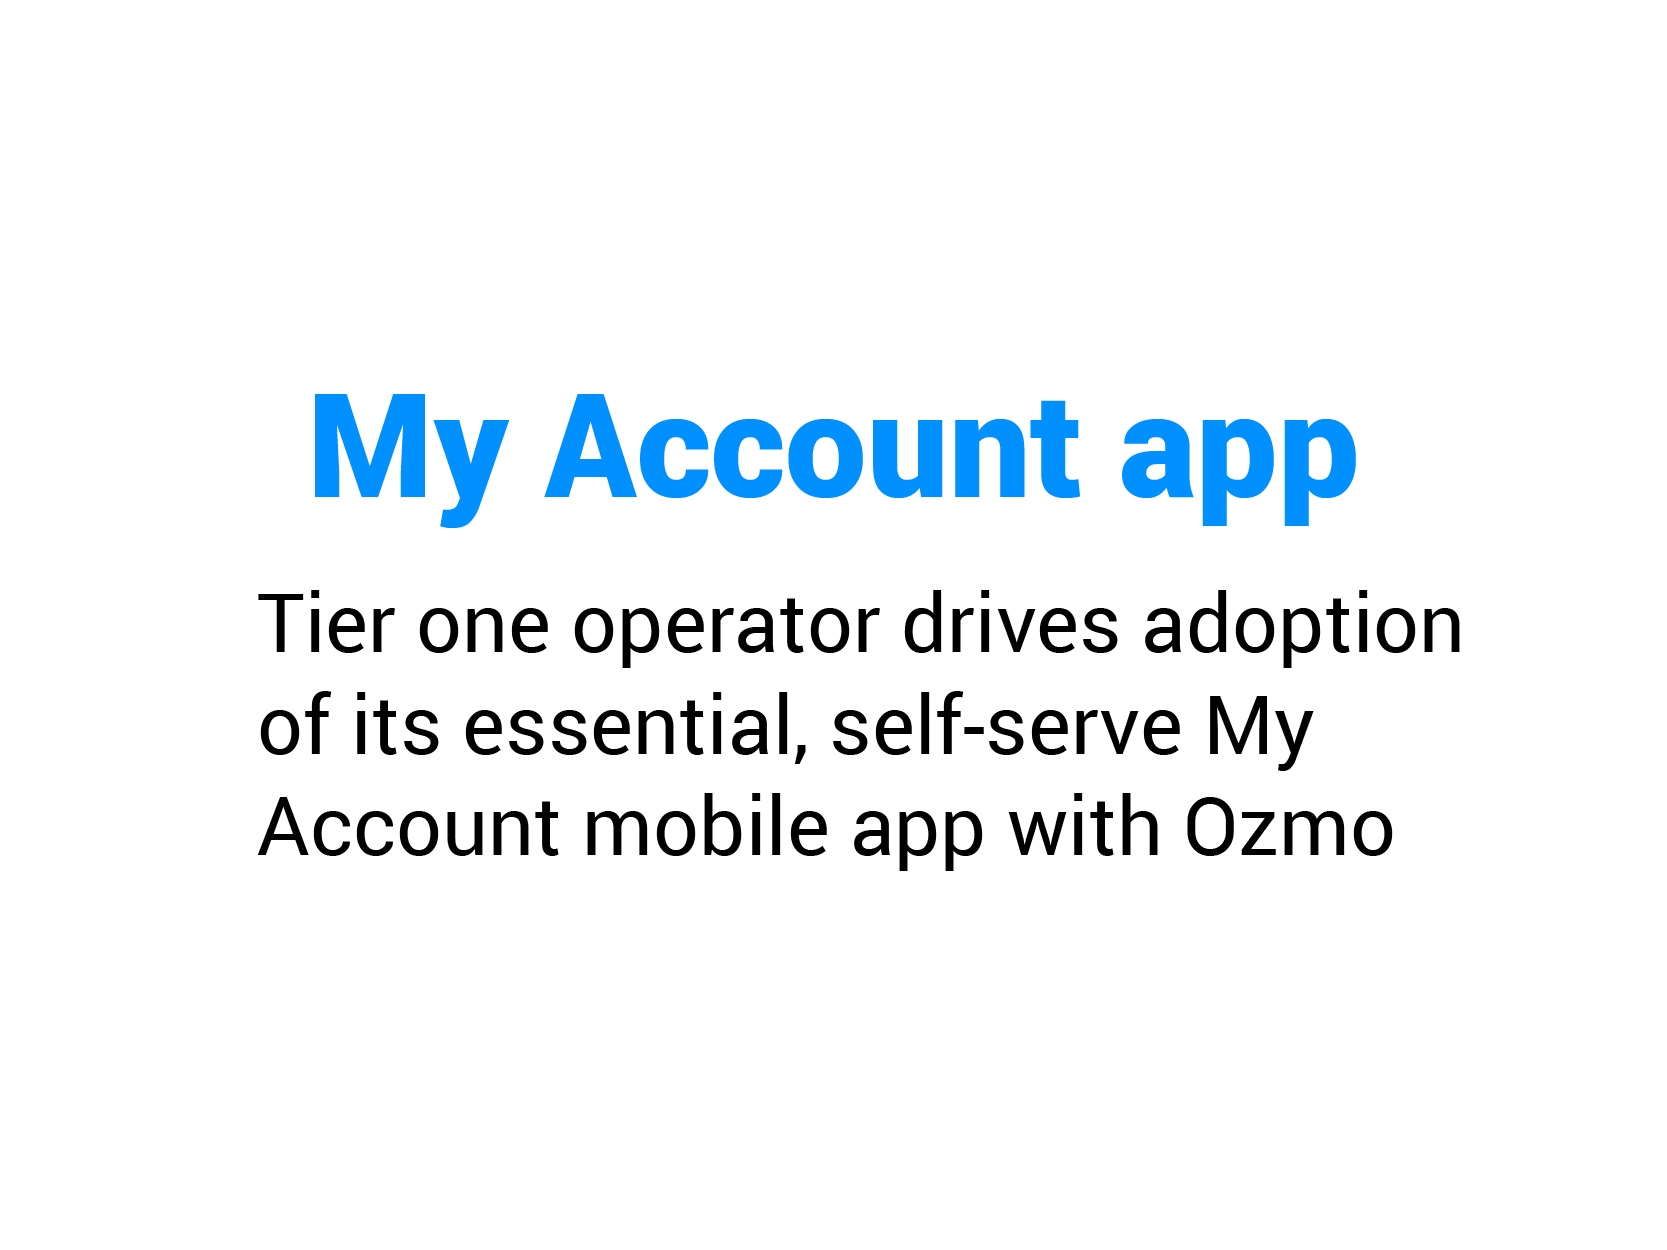 MyAccount app support case study